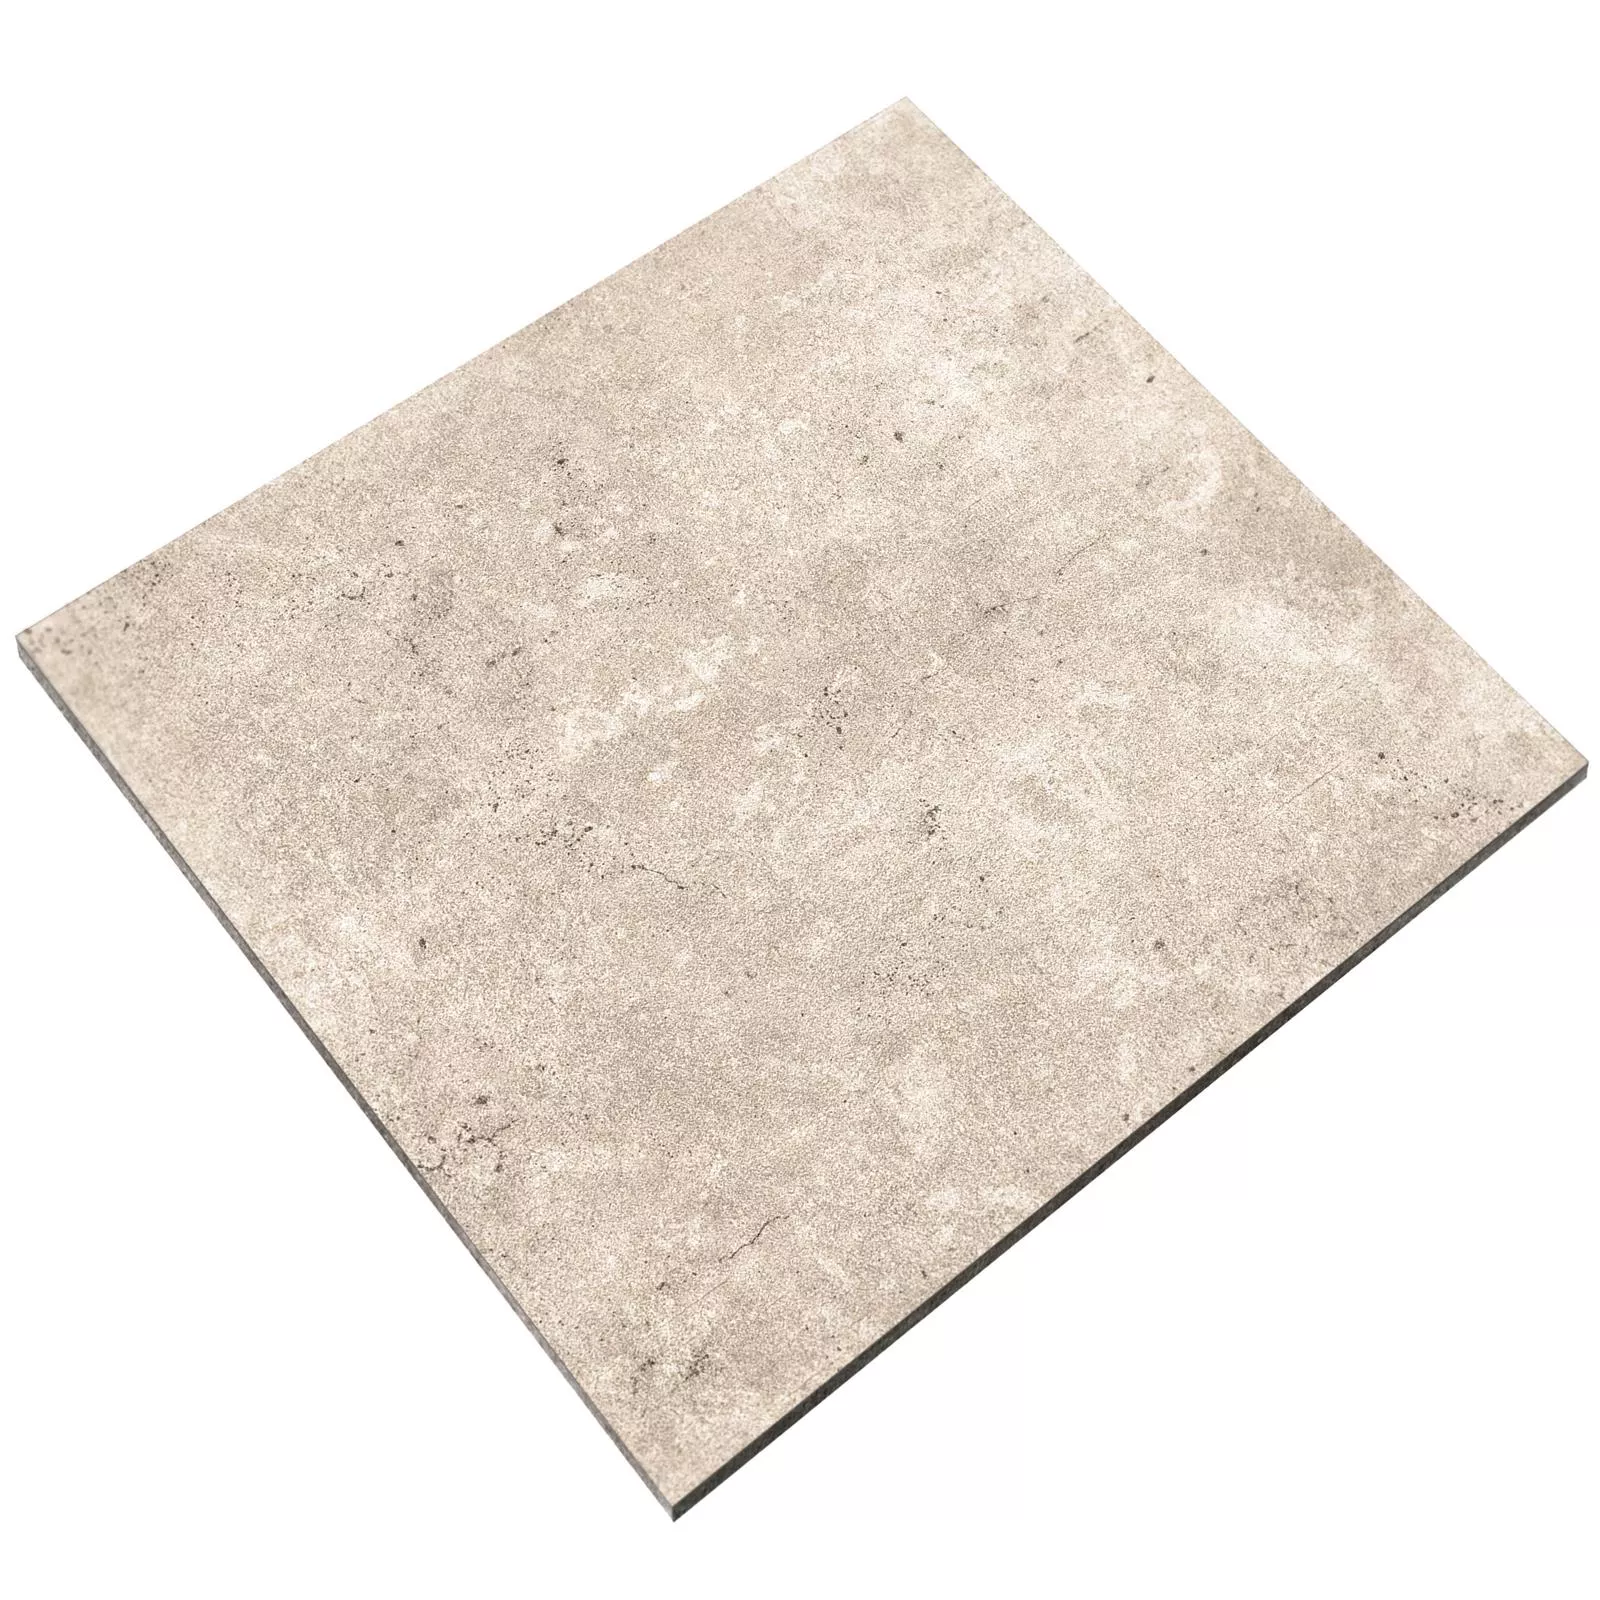 Floor Tiles Jamaica Beton Optic Sand 60x60cm